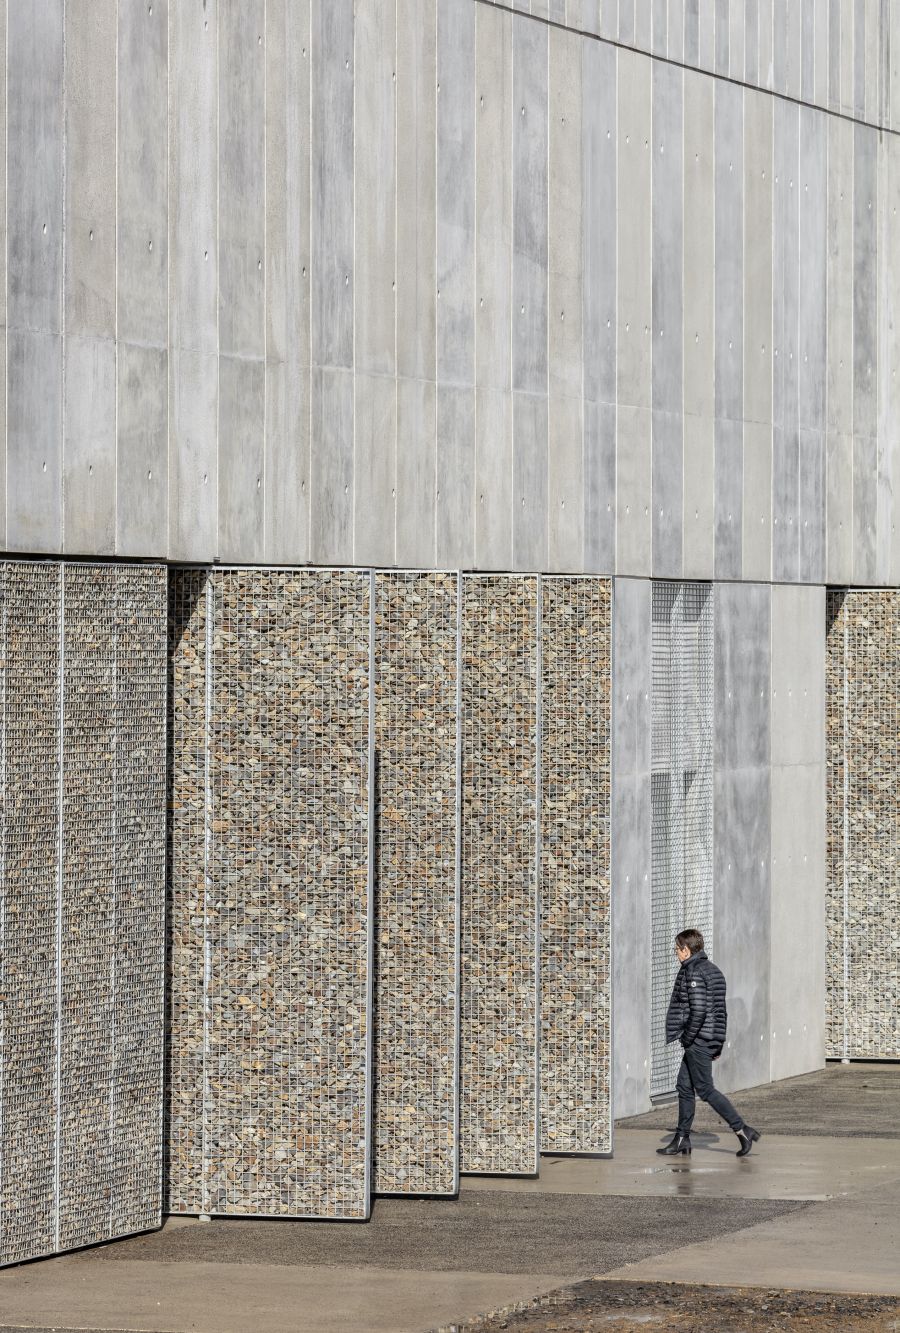 Maison du technopôle - arch. Randja Farid Azib Architects © Luc Boegly 